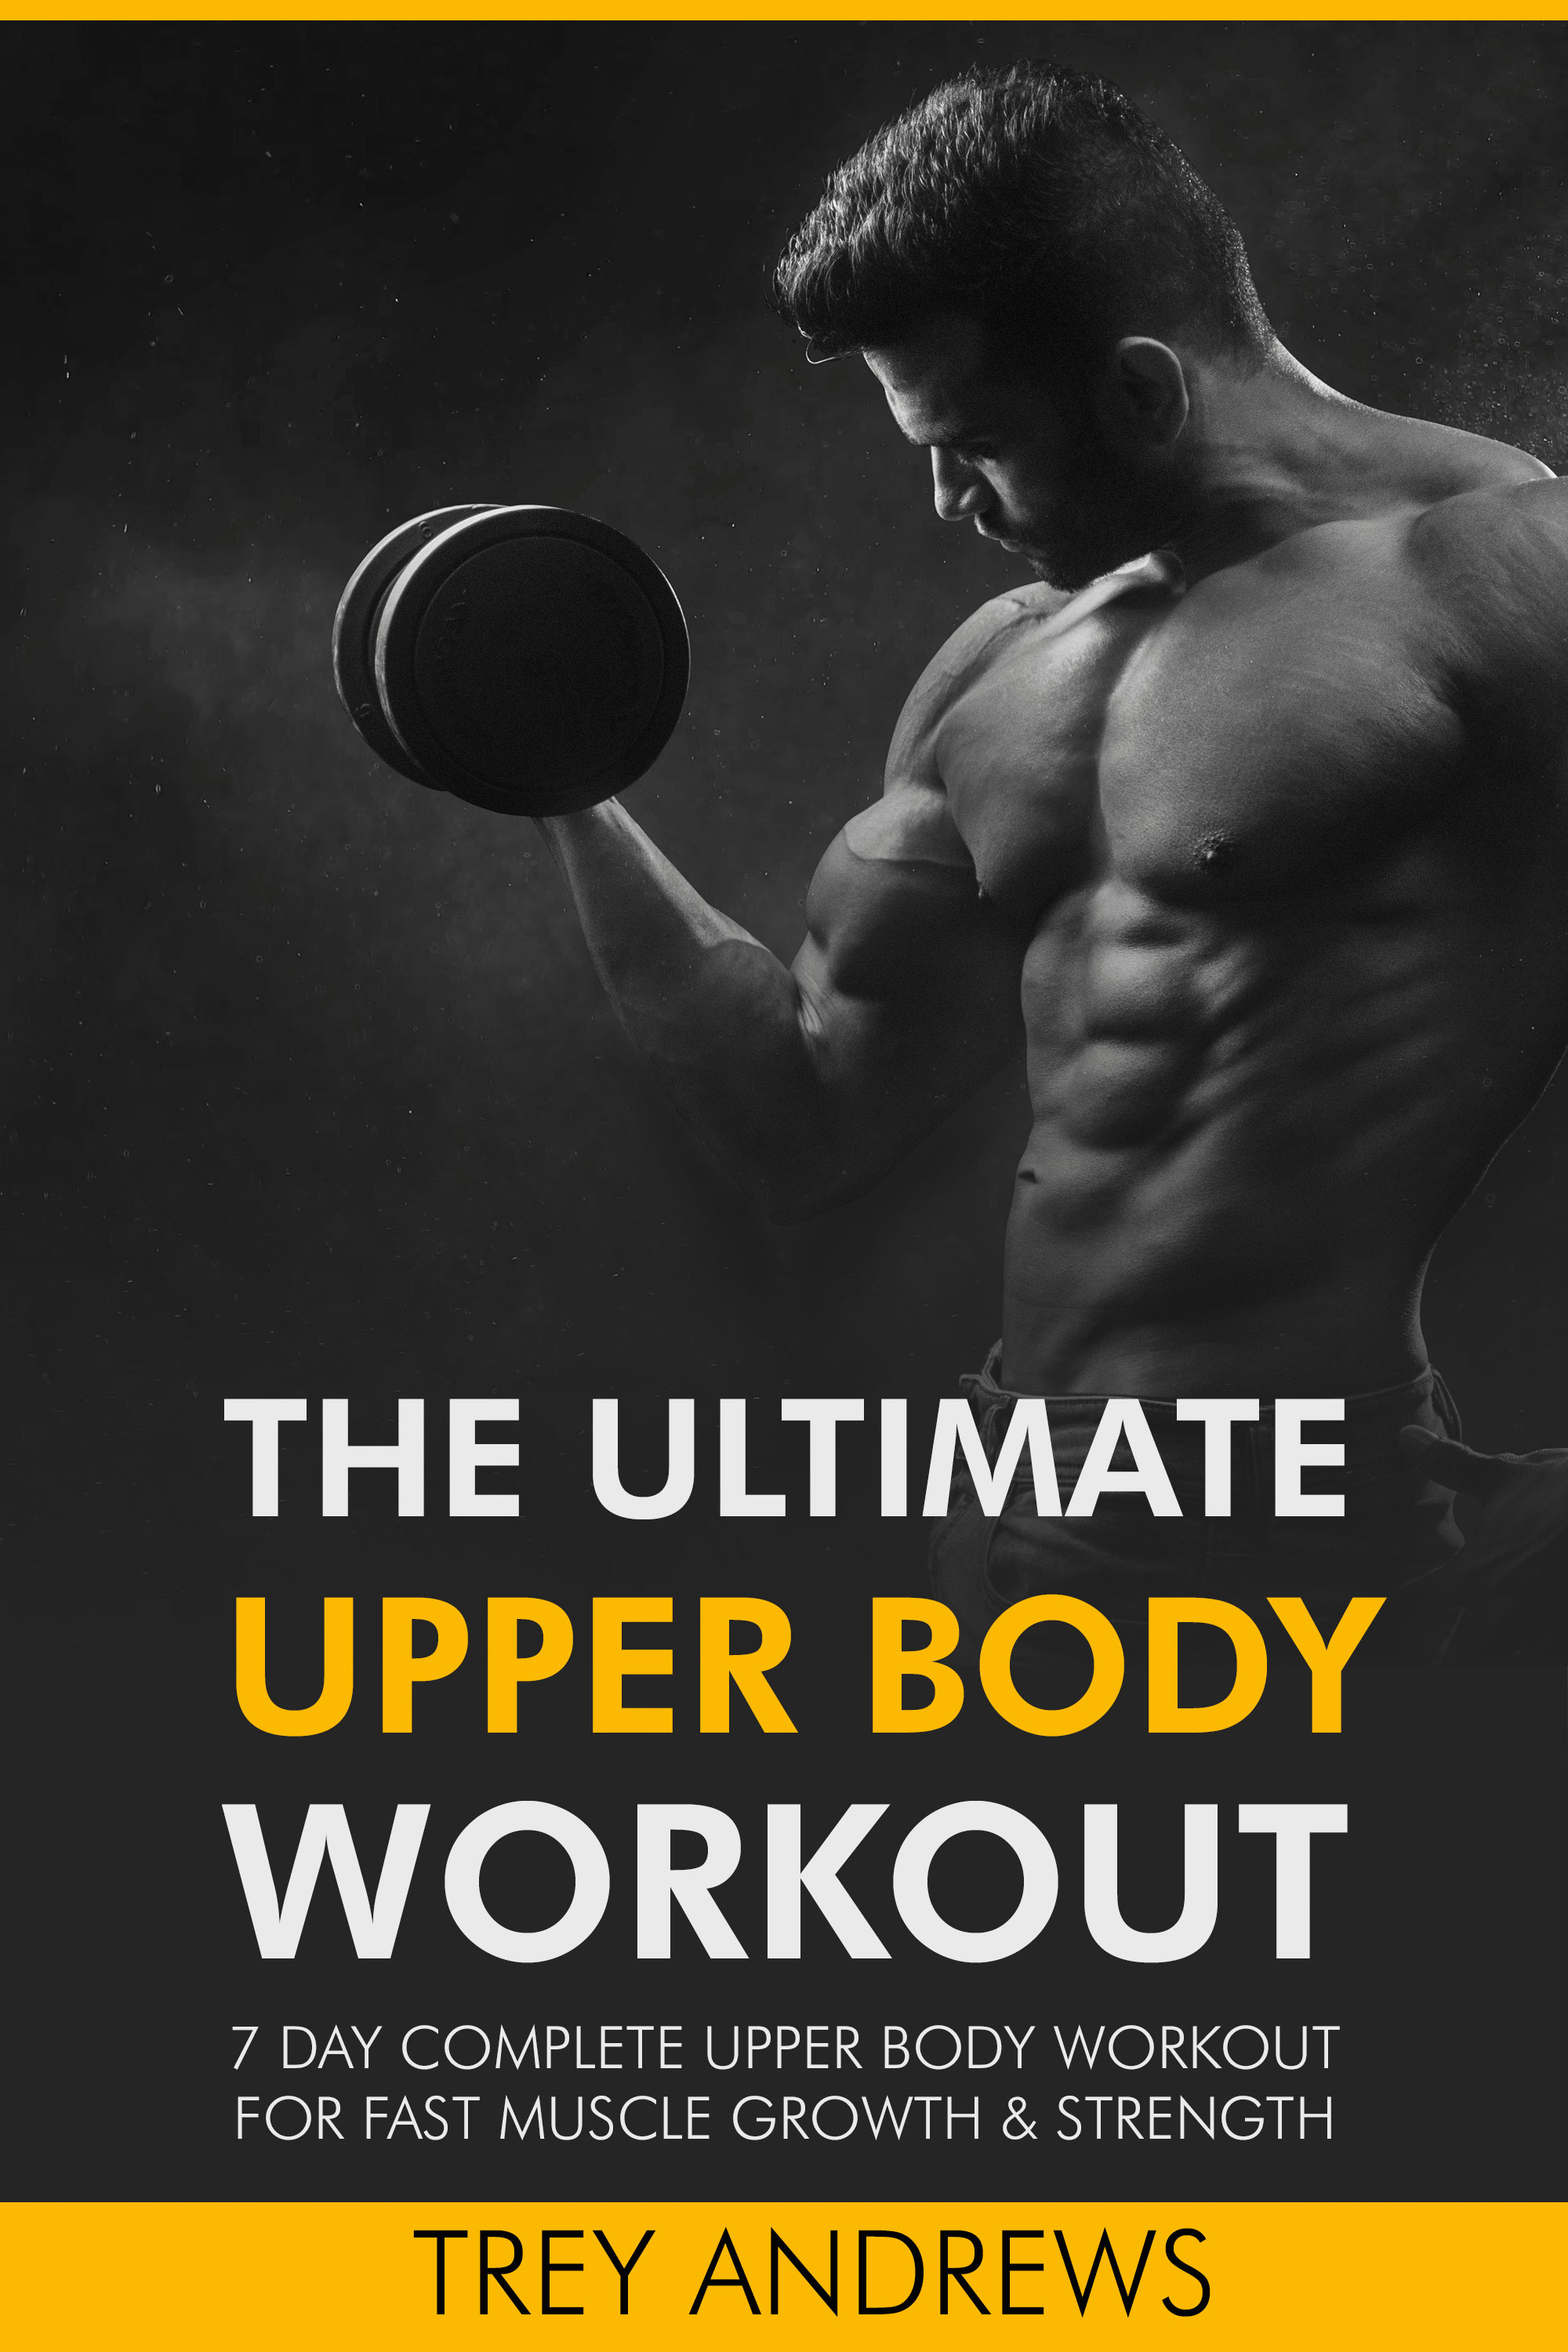 Upper Body Exercises